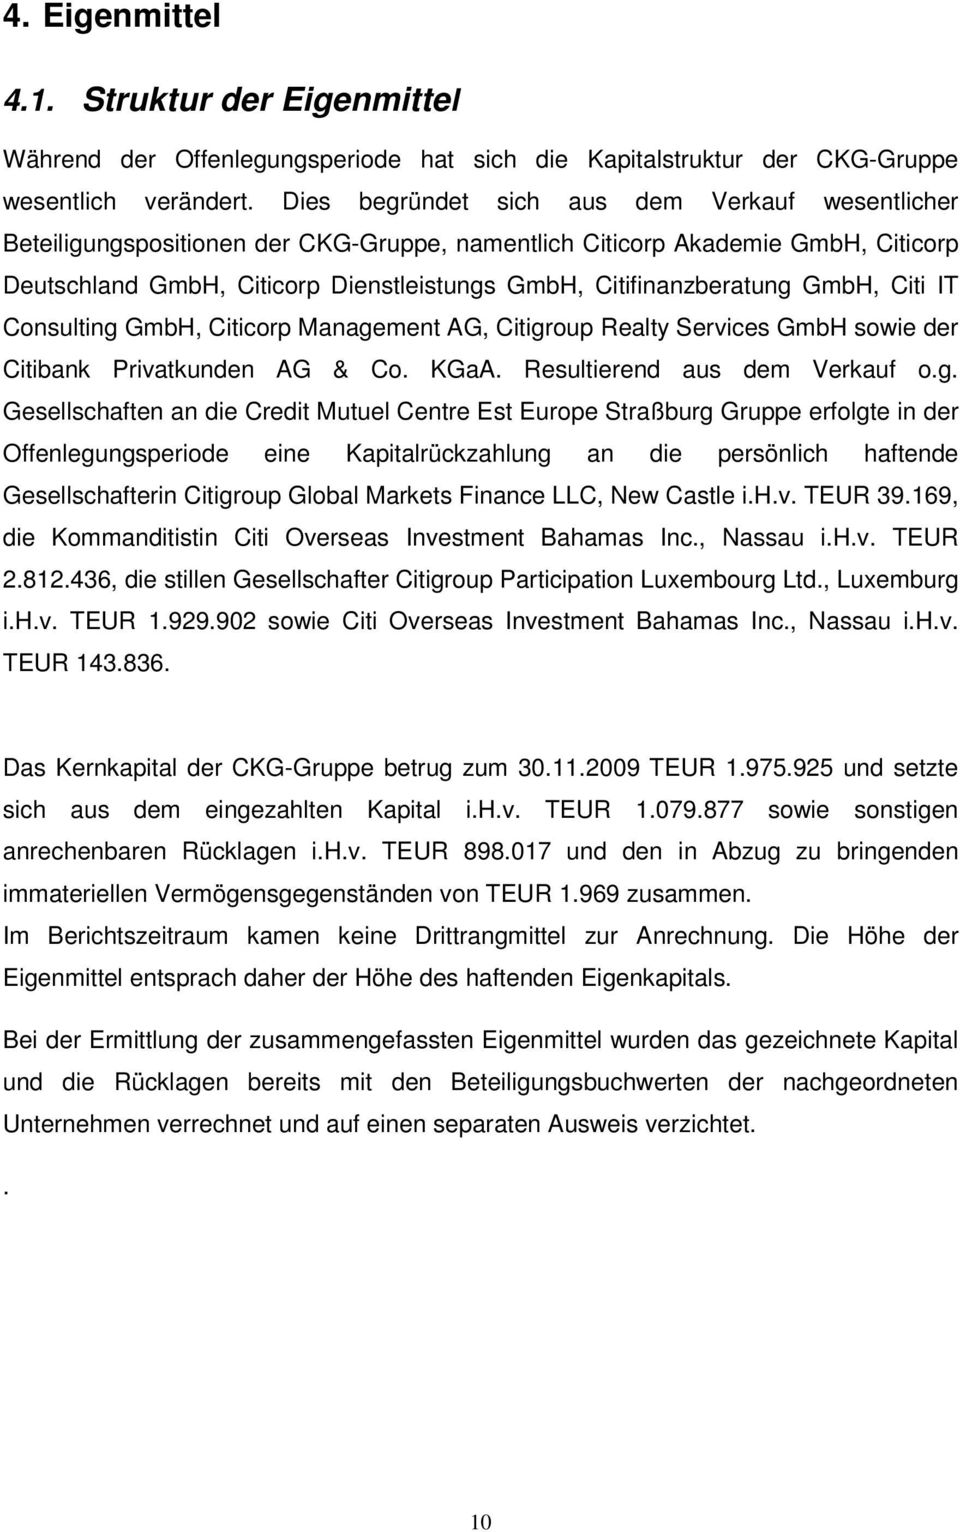 GmbH, Citi IT Consulting 